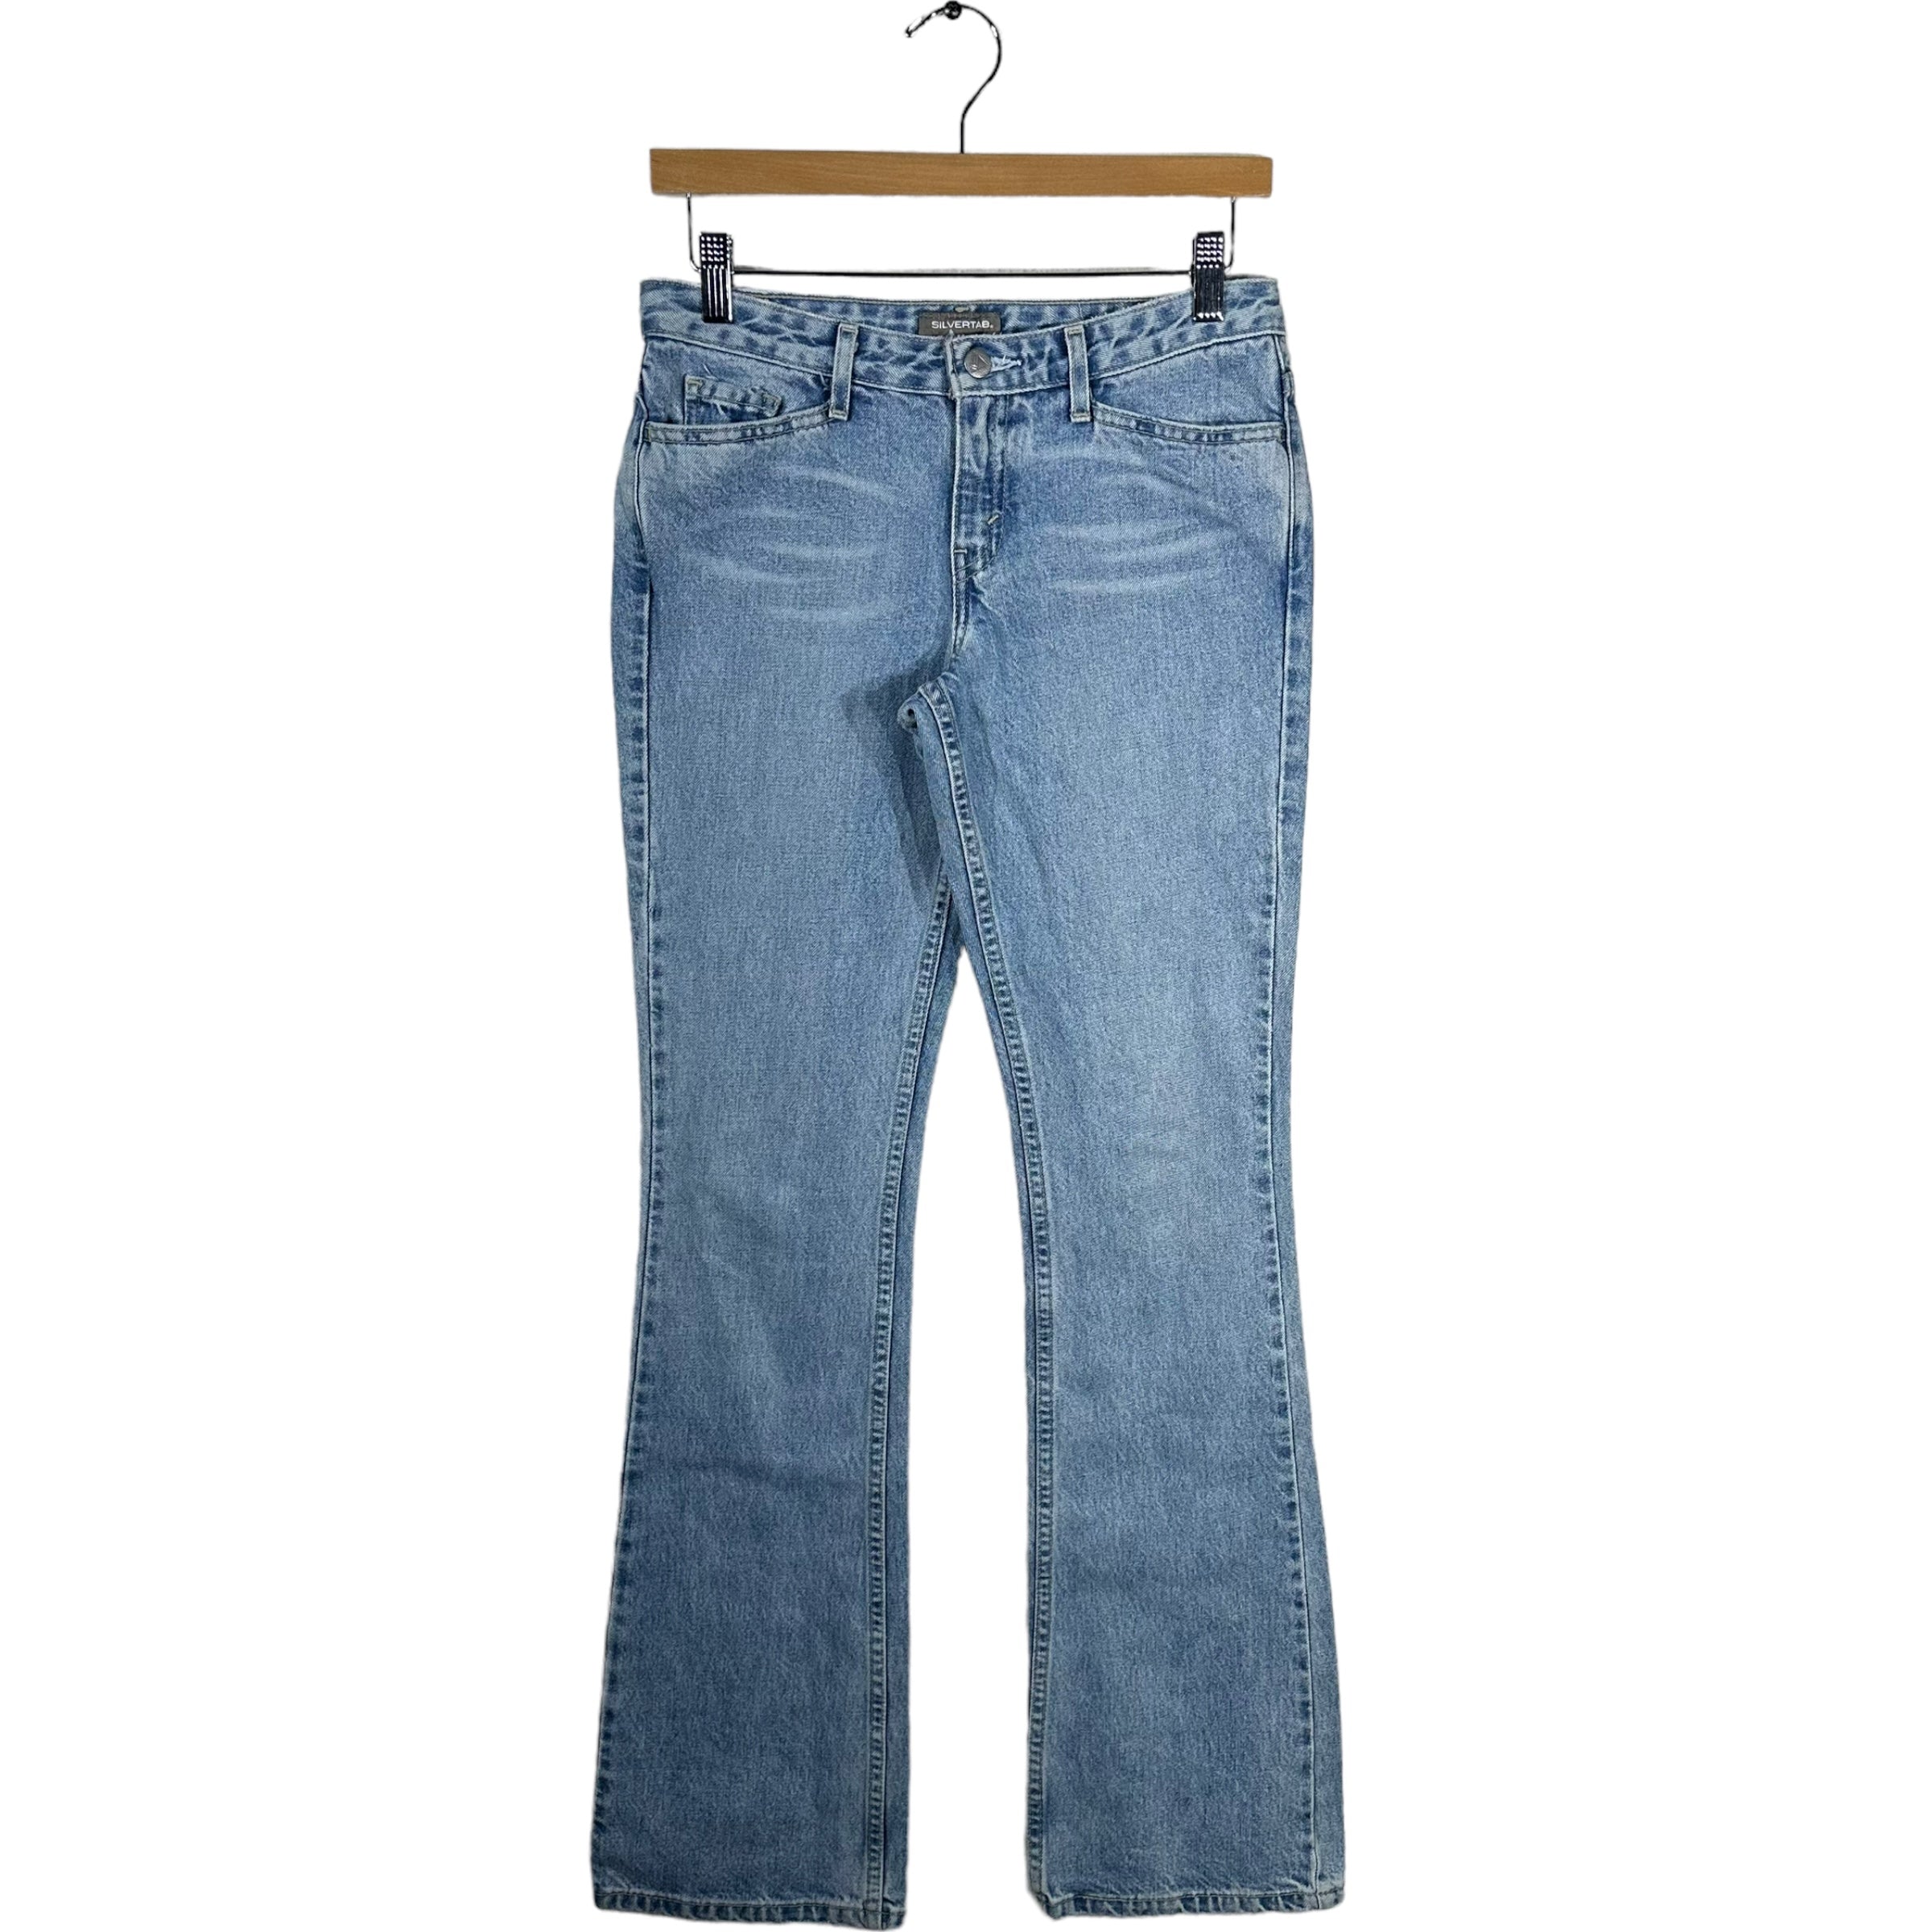 Vintage Levi's Silver Tab Jeans